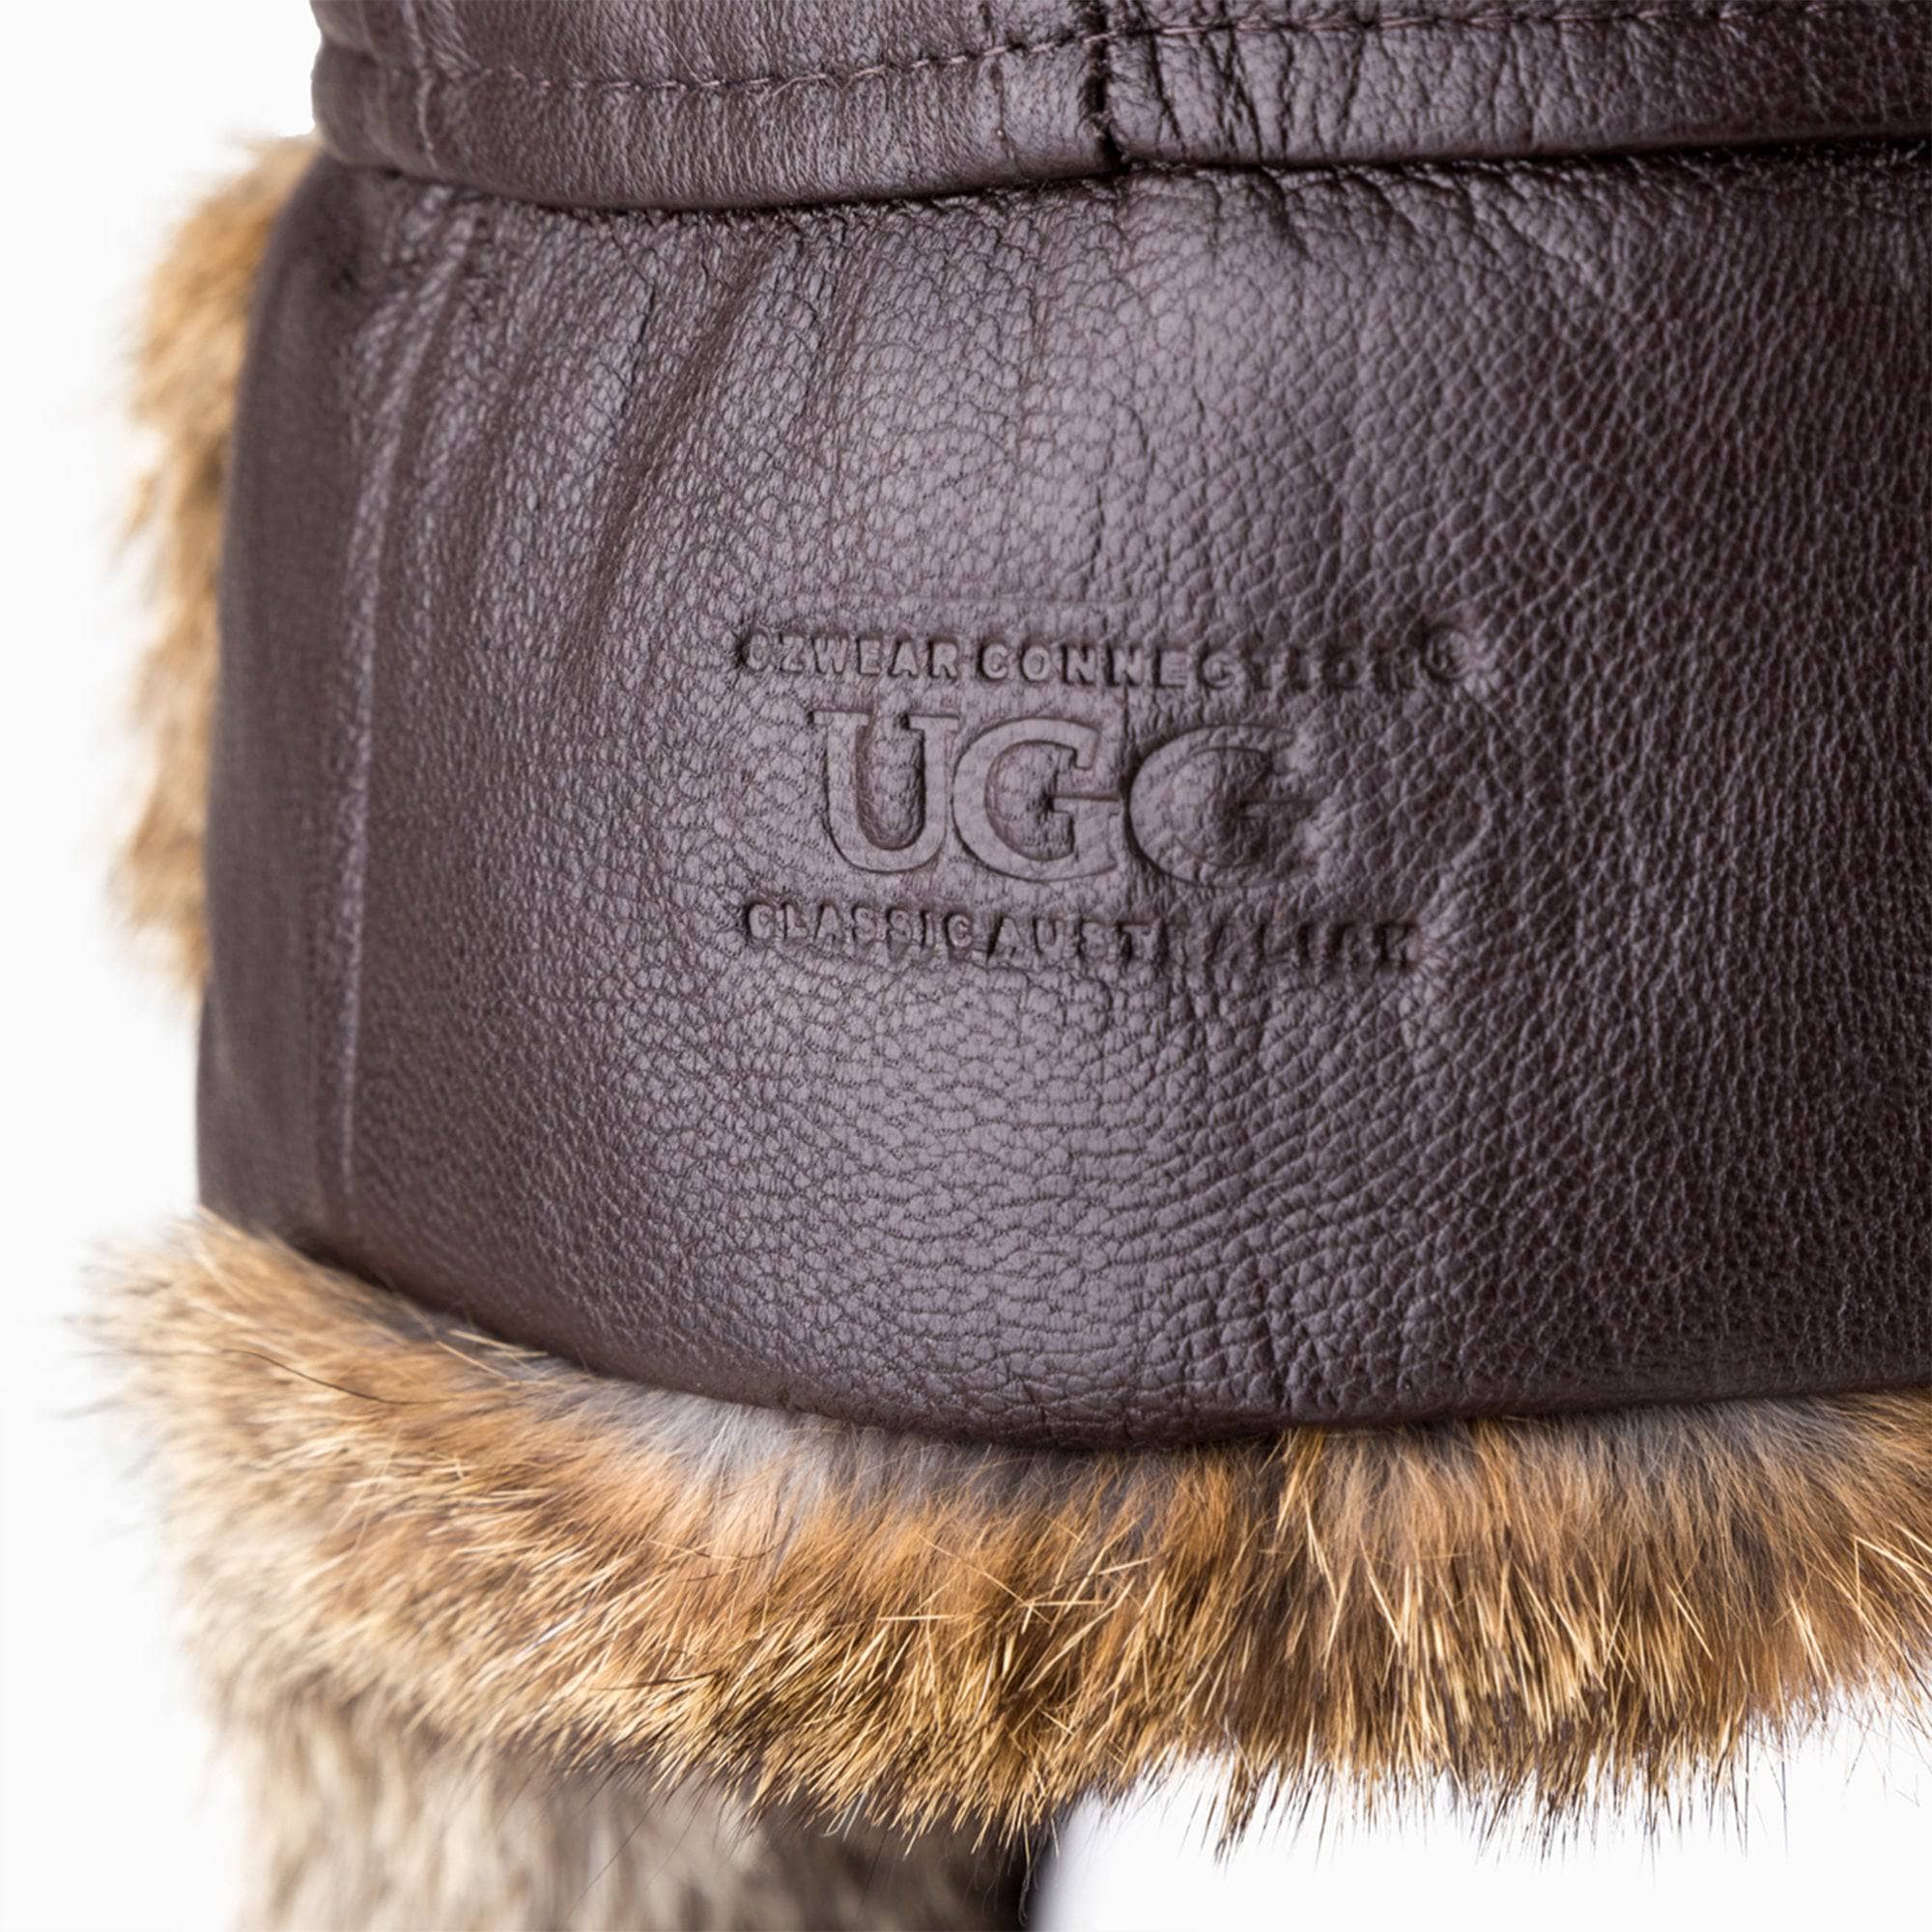  - UGG Aviator Leather Hat with Rabbit Fur - Original UGG Australia Classic